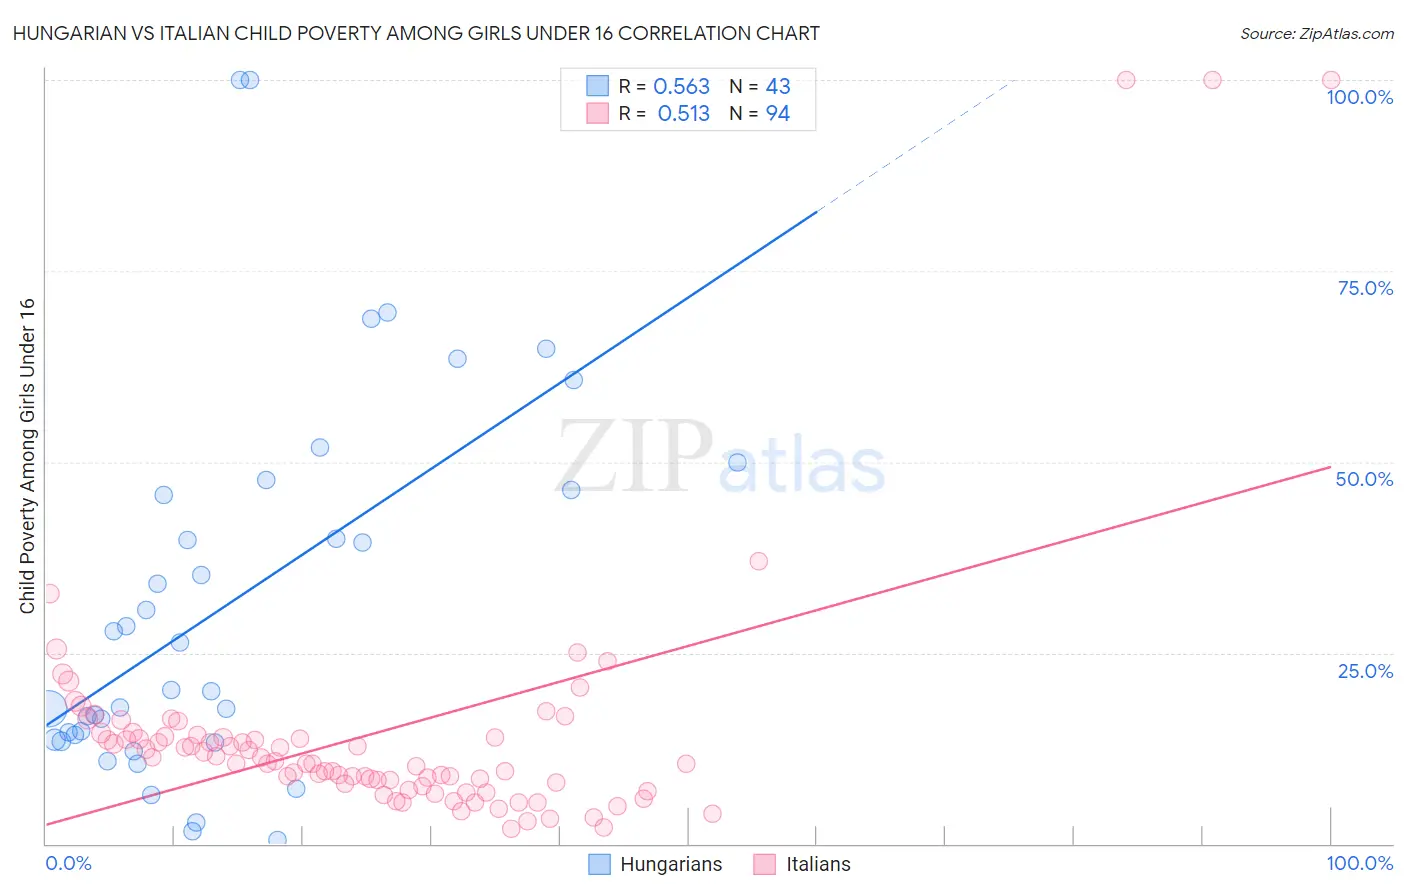 Hungarian vs Italian Child Poverty Among Girls Under 16